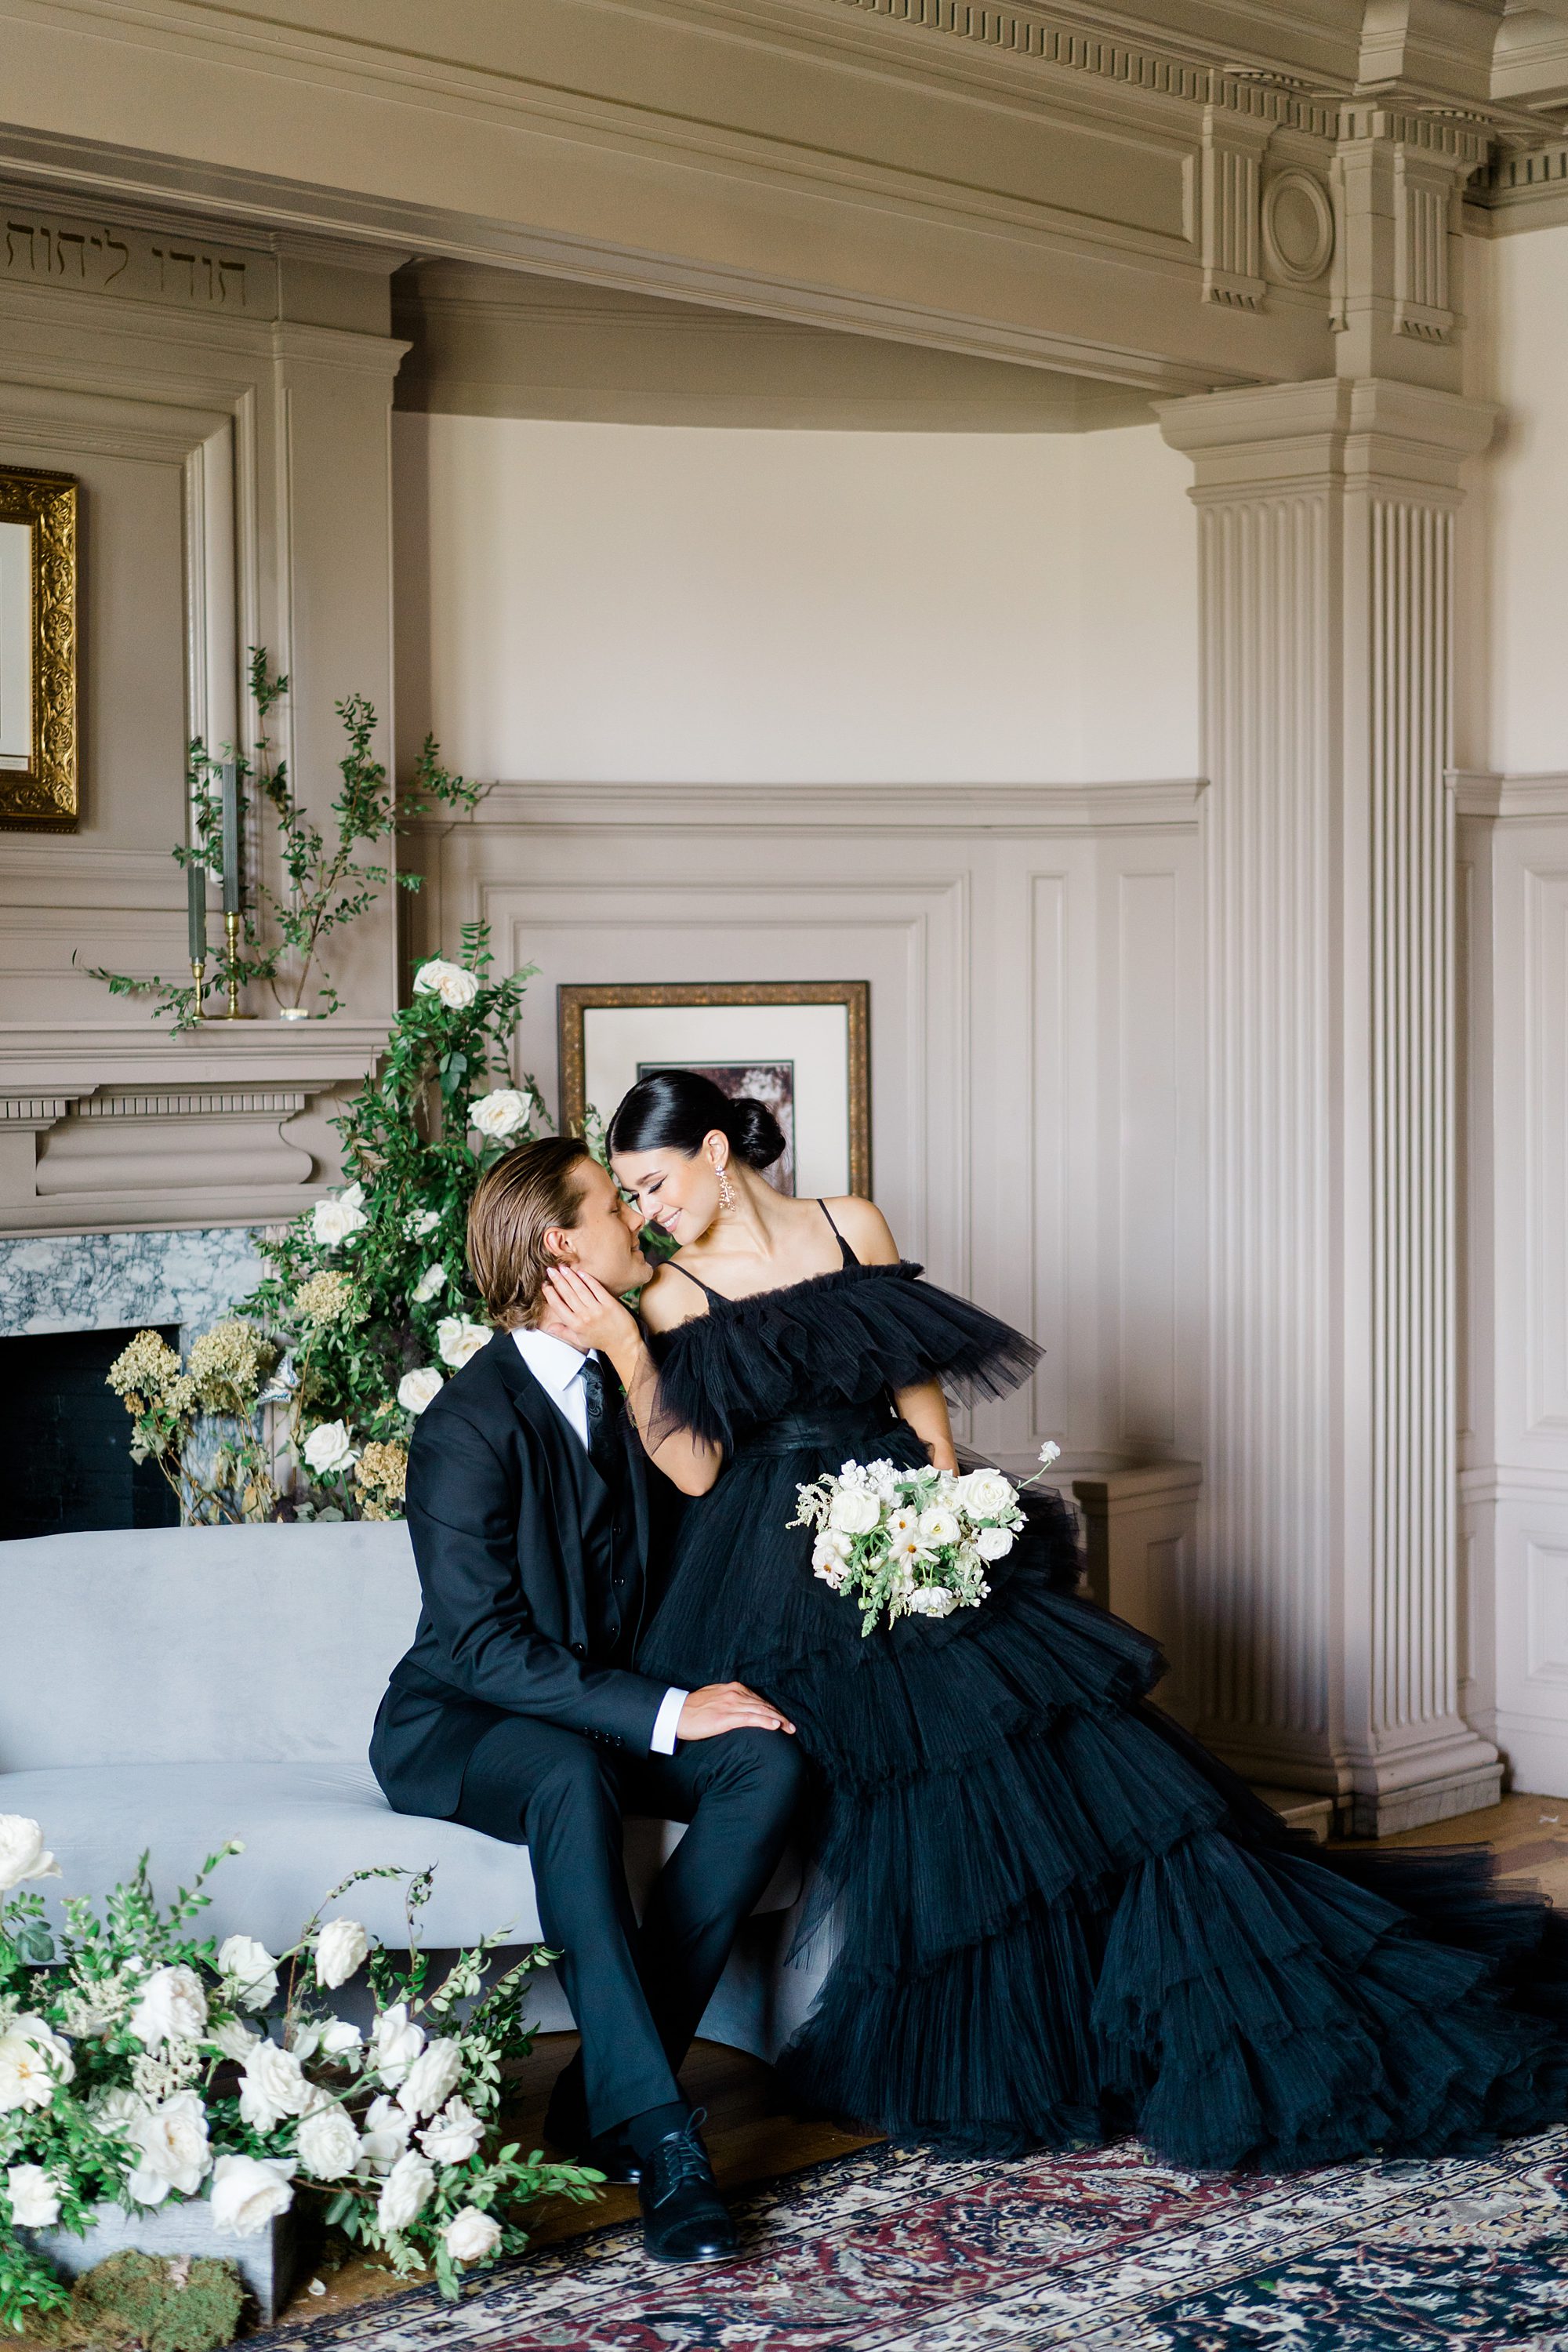 Modern wedding couple in black attire